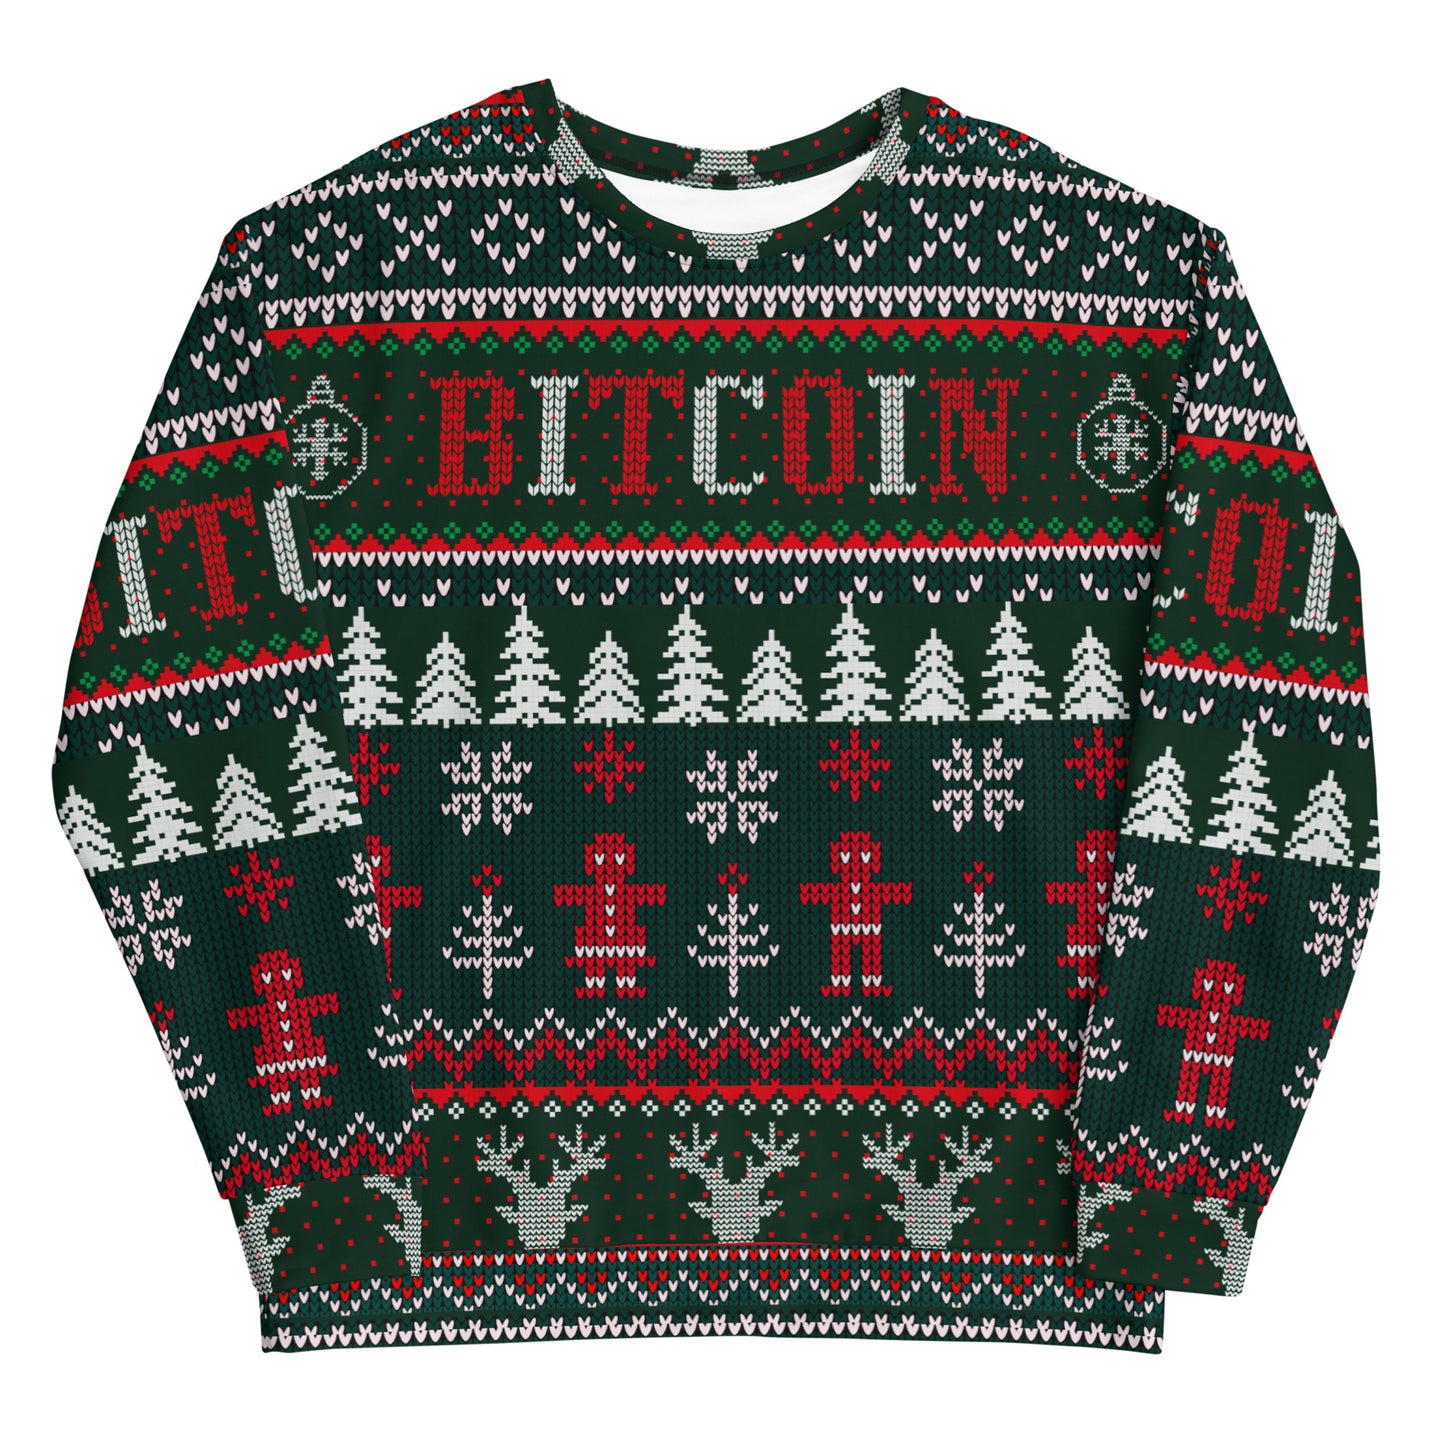 Bitcoin Snowman Sweatshirt